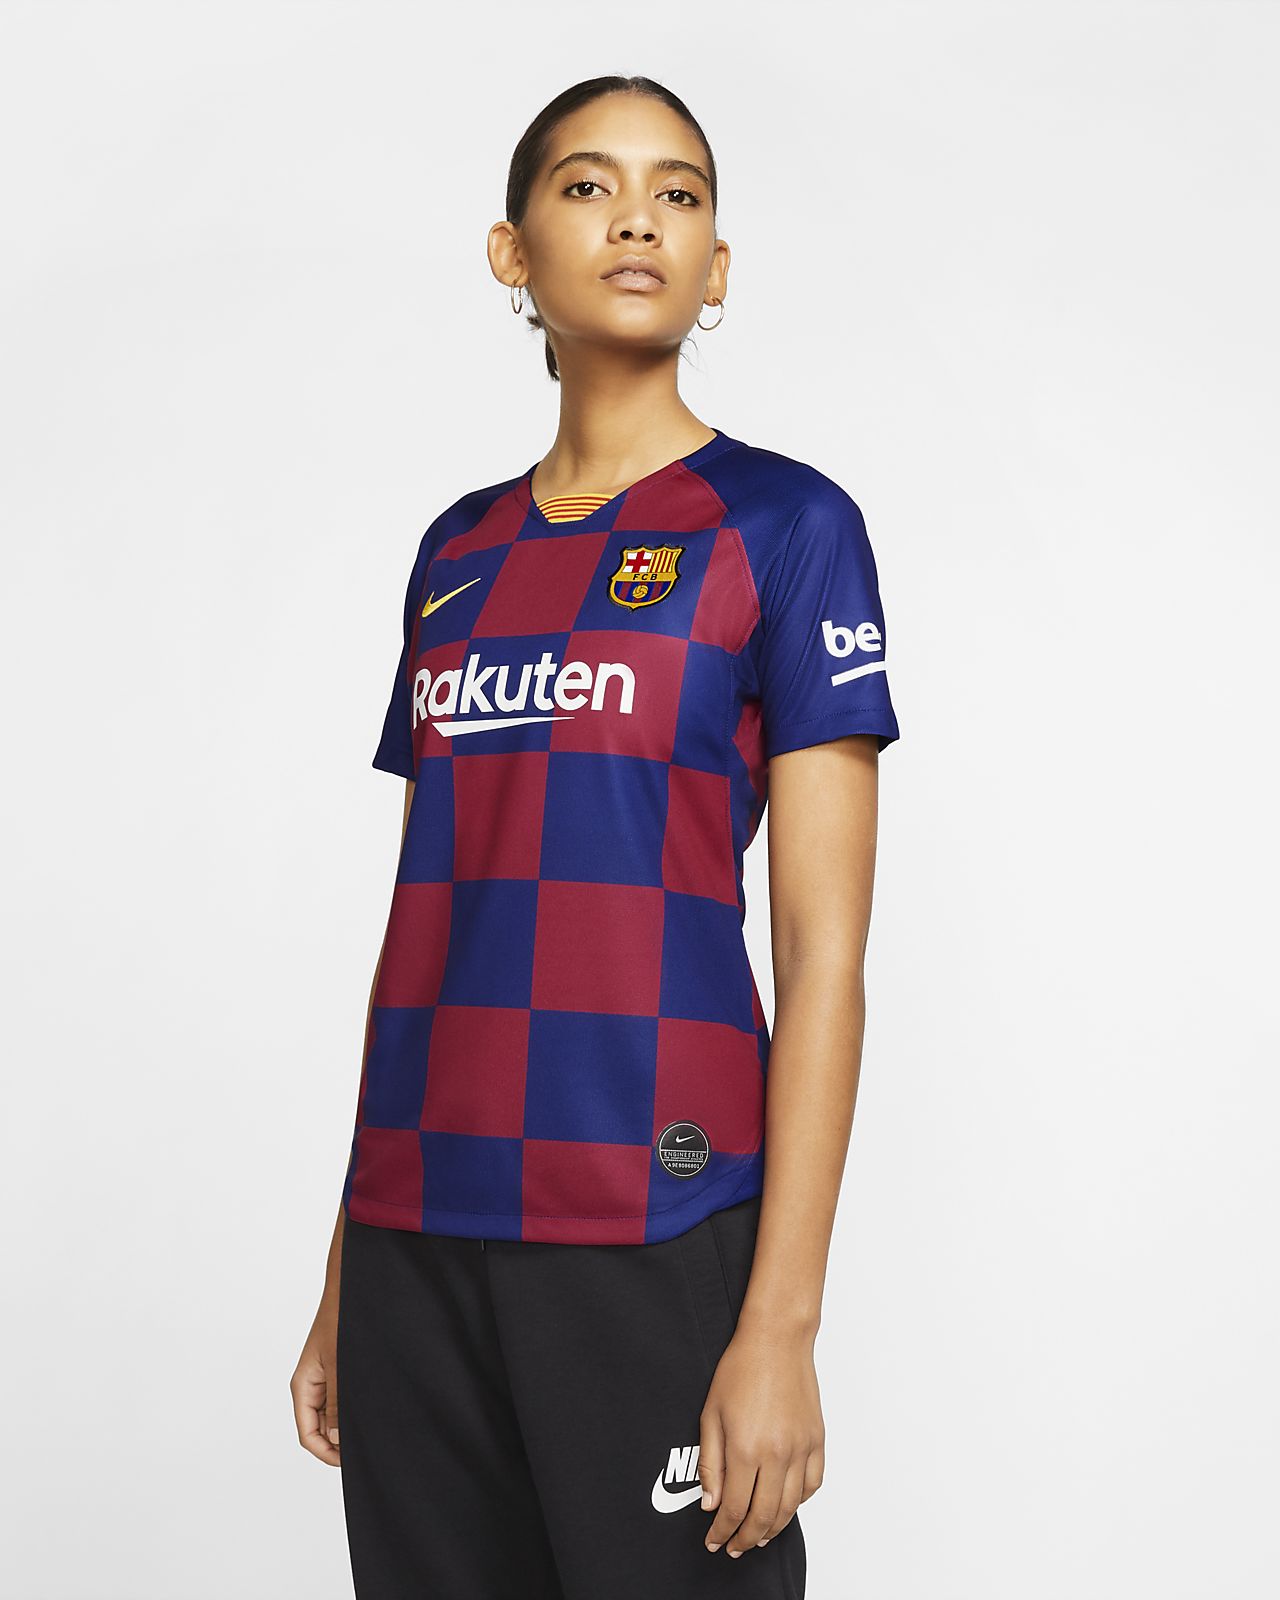 fc barcelona jersey 2019